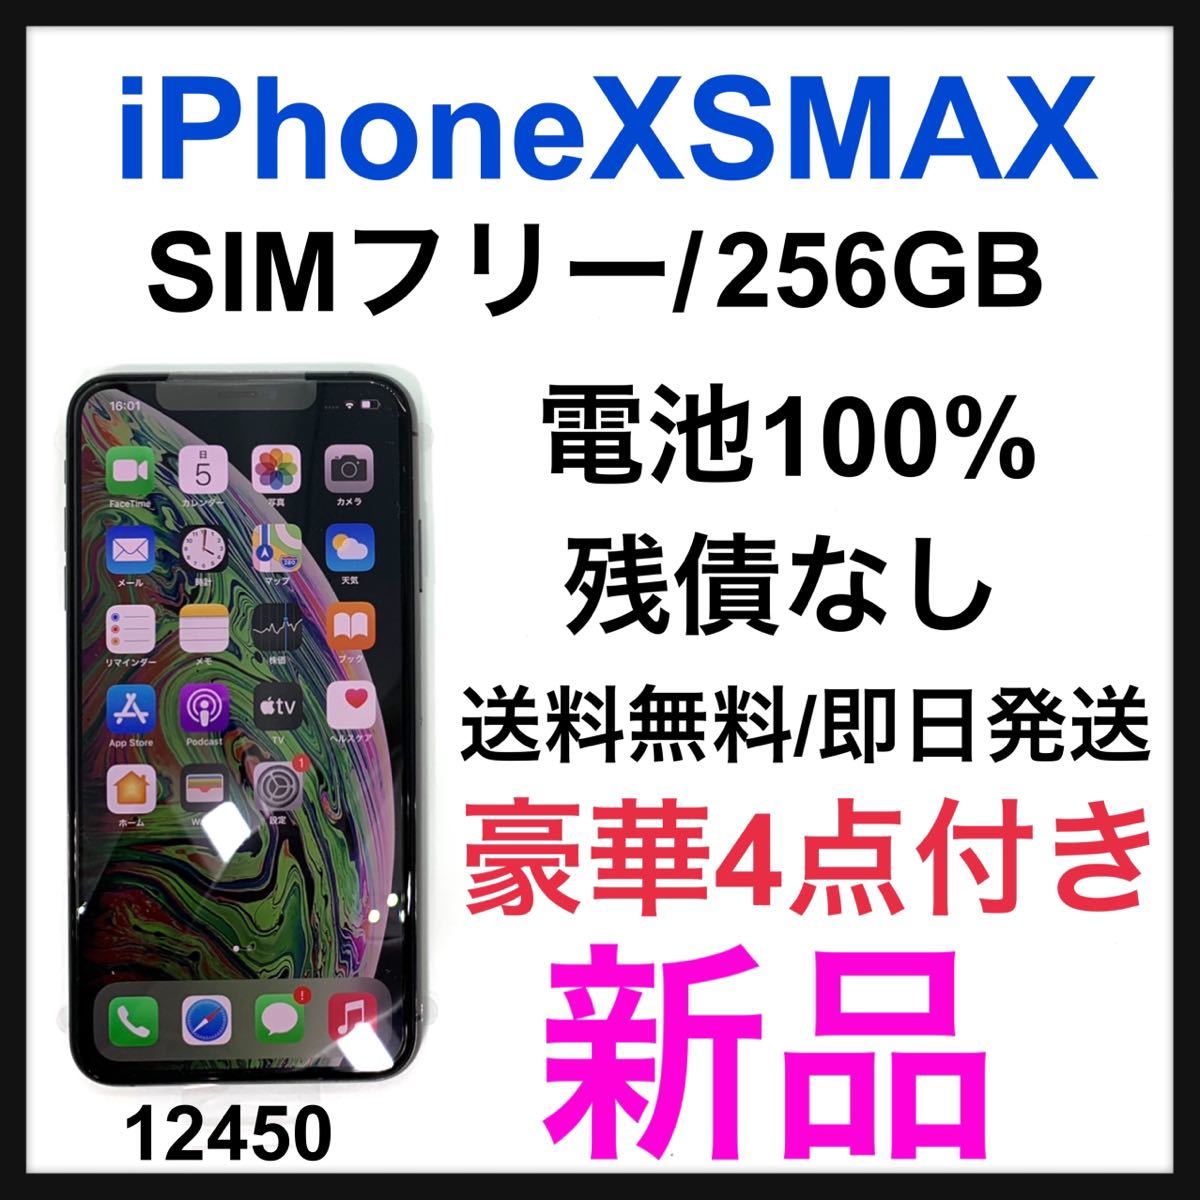 iPhoneXs Space Gray 256GB SIMフリー | guru.hu